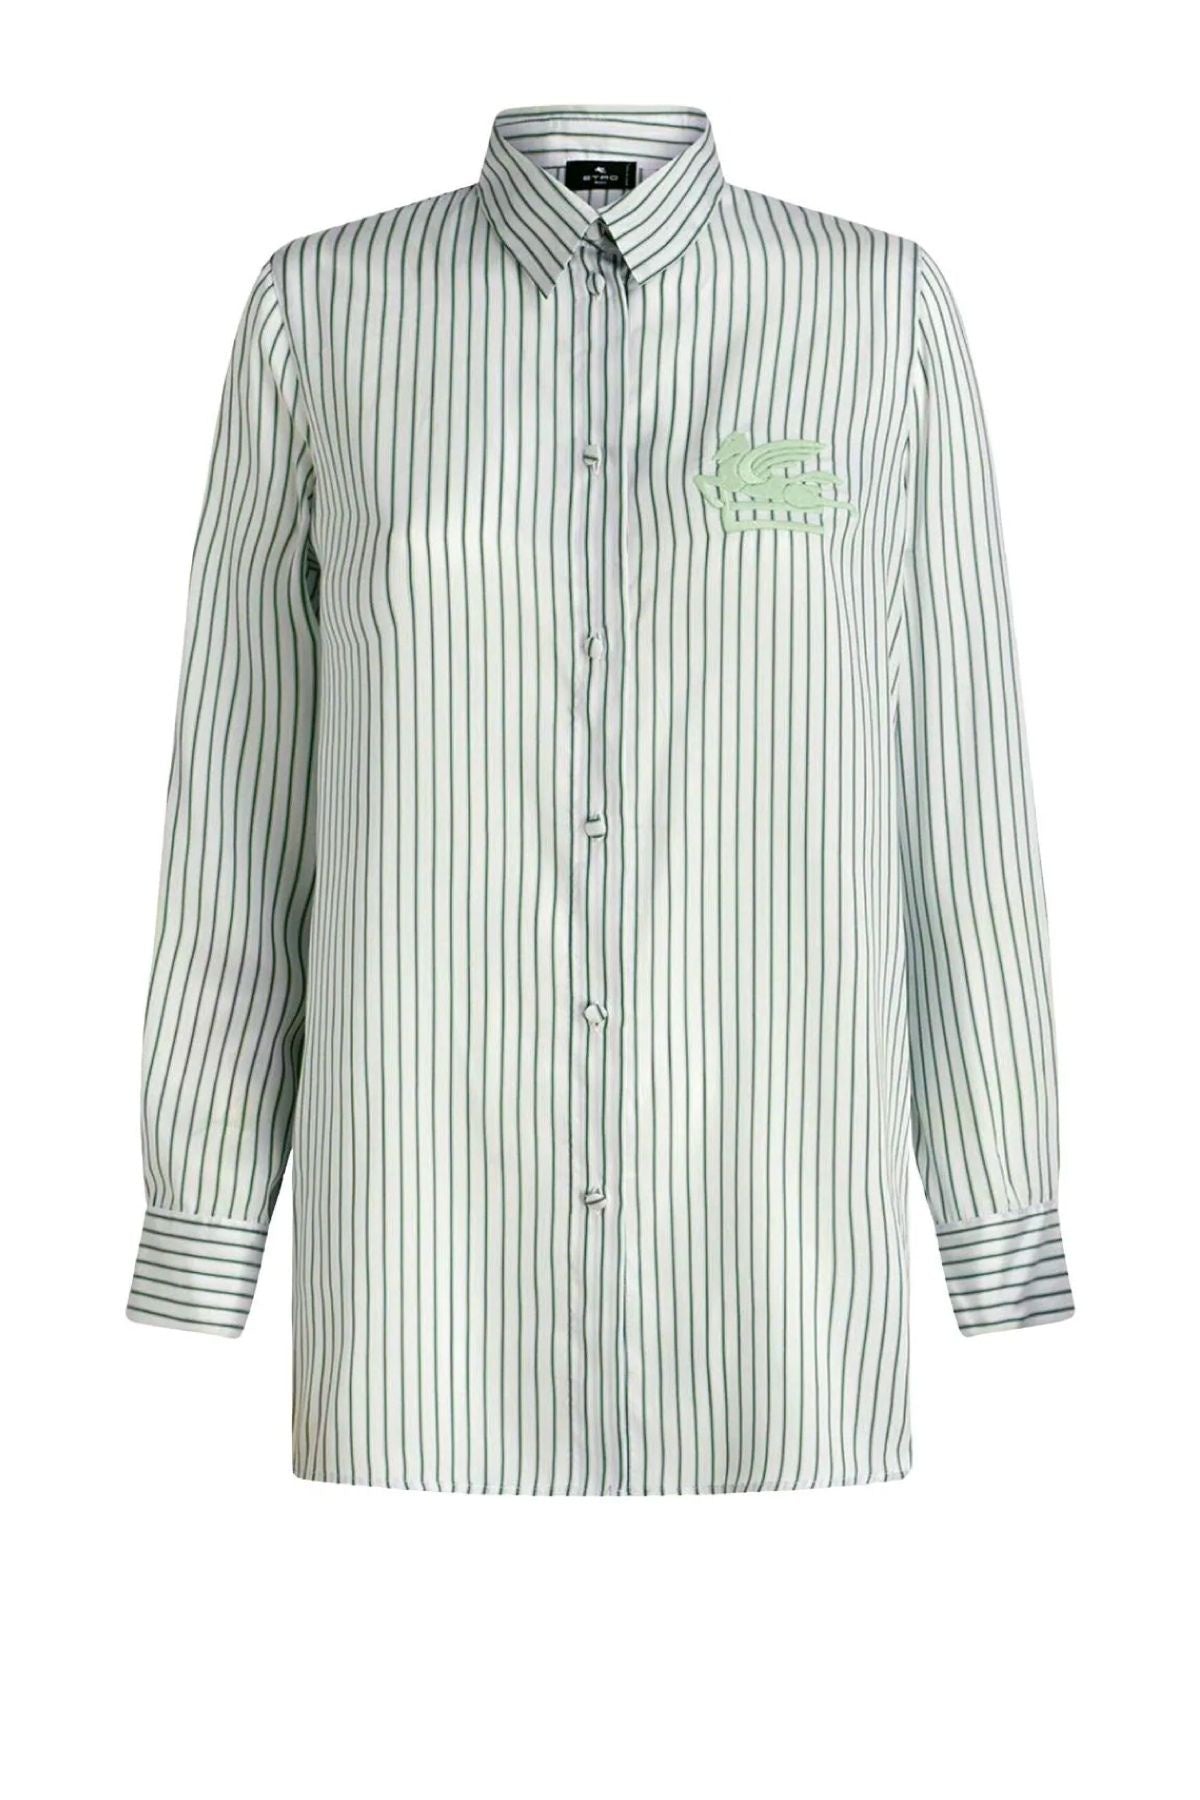 Etro Pinstripe Silk Shirt - Green